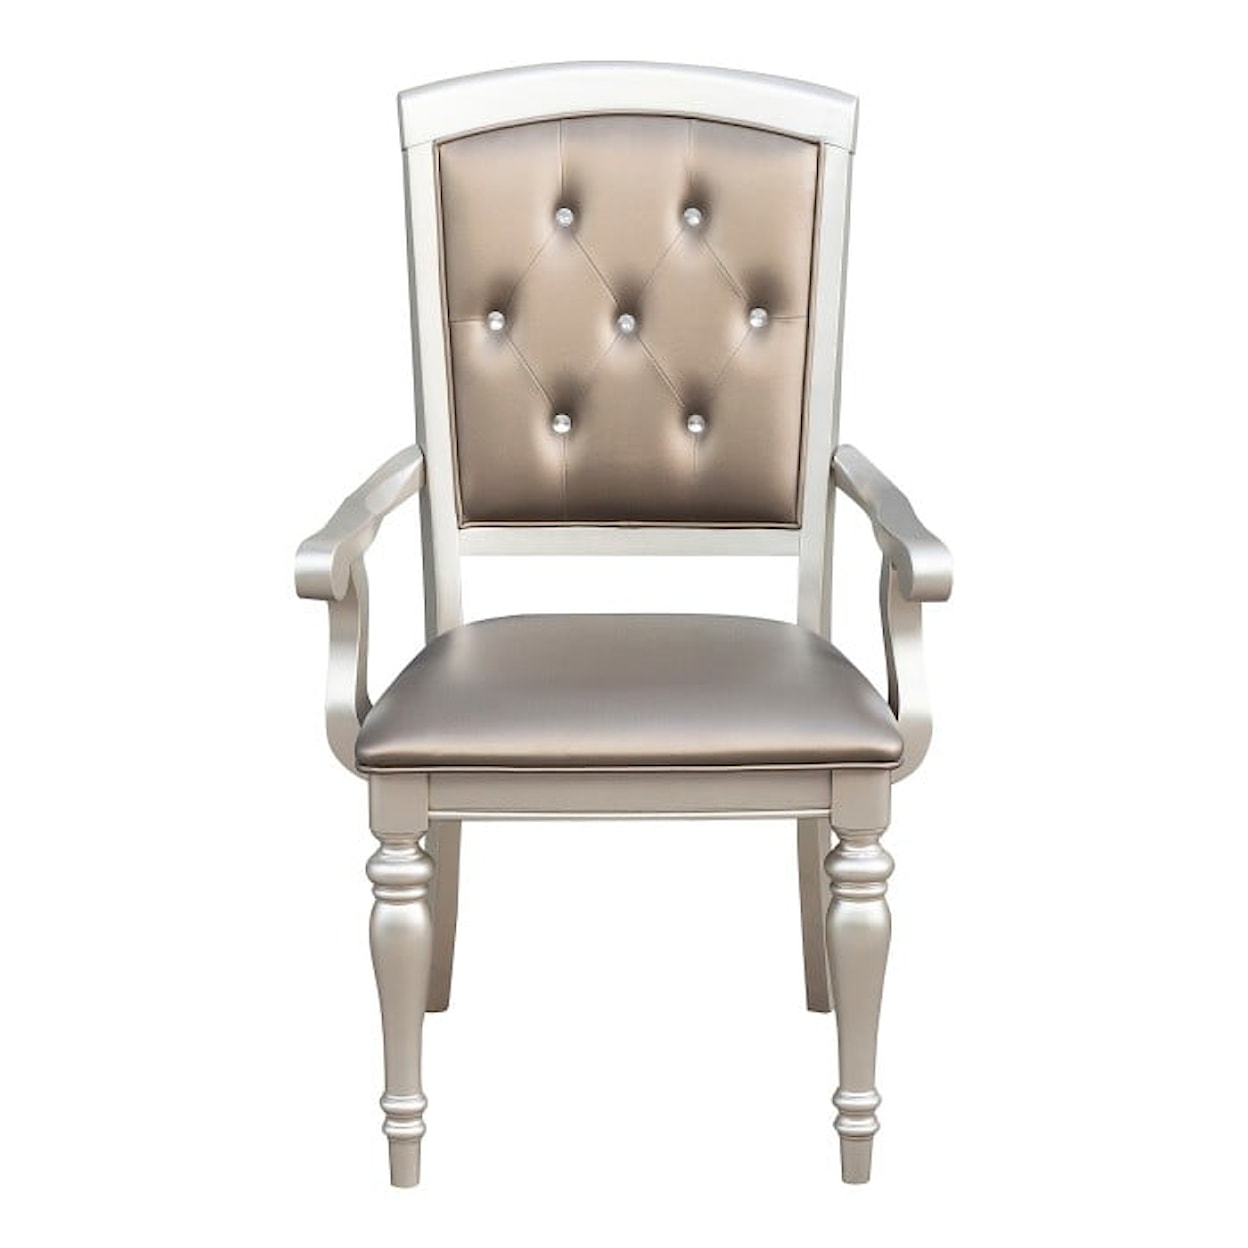 Homelegance Orsina Arm Chair